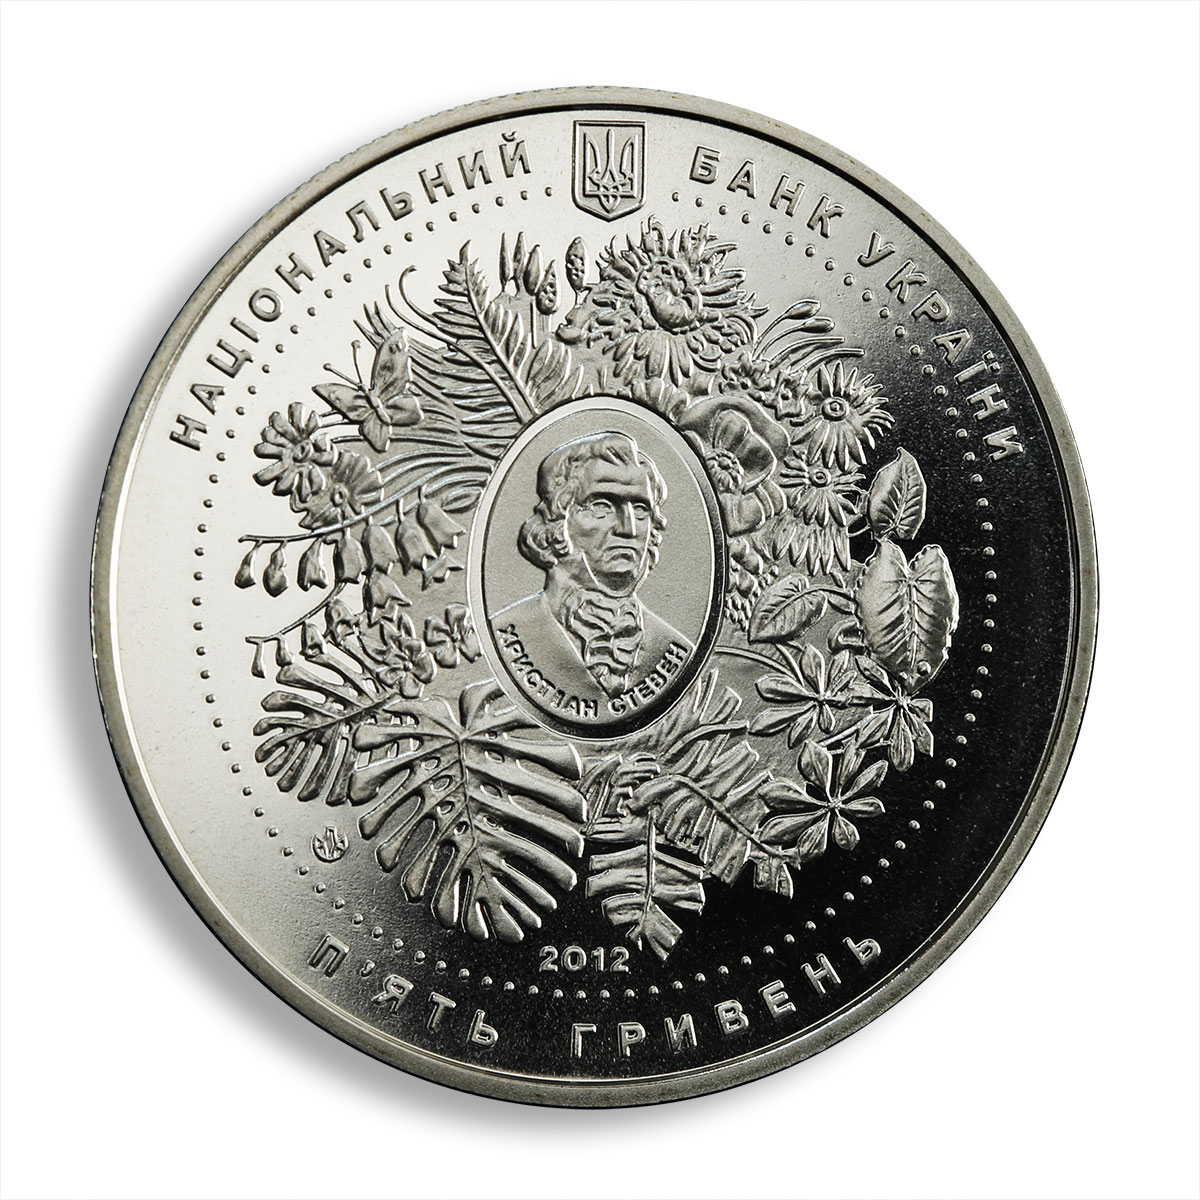 Ukraine 5 hryvnia 200 years of Nikitsky Botanical Garden Crimea nickel coin 2012